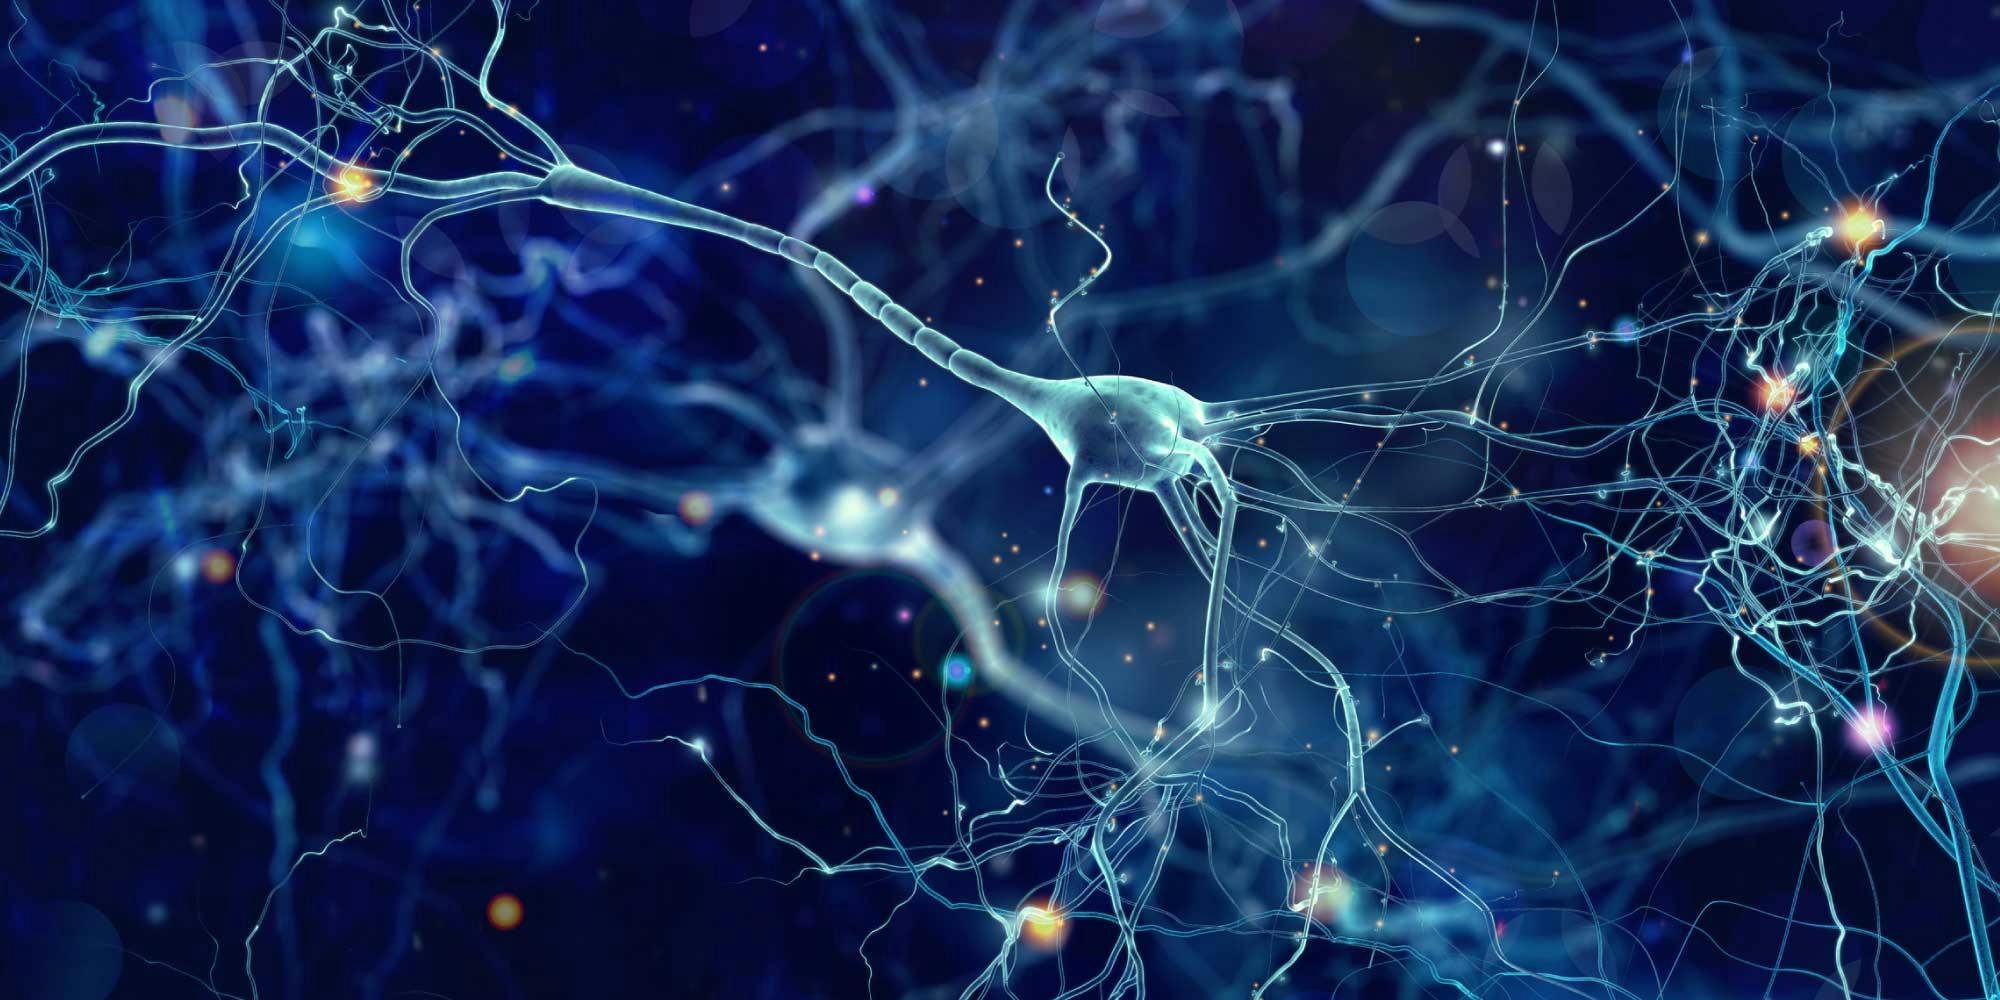 Neuropixels 2.0 enables brain-wide recordings of neuron activity